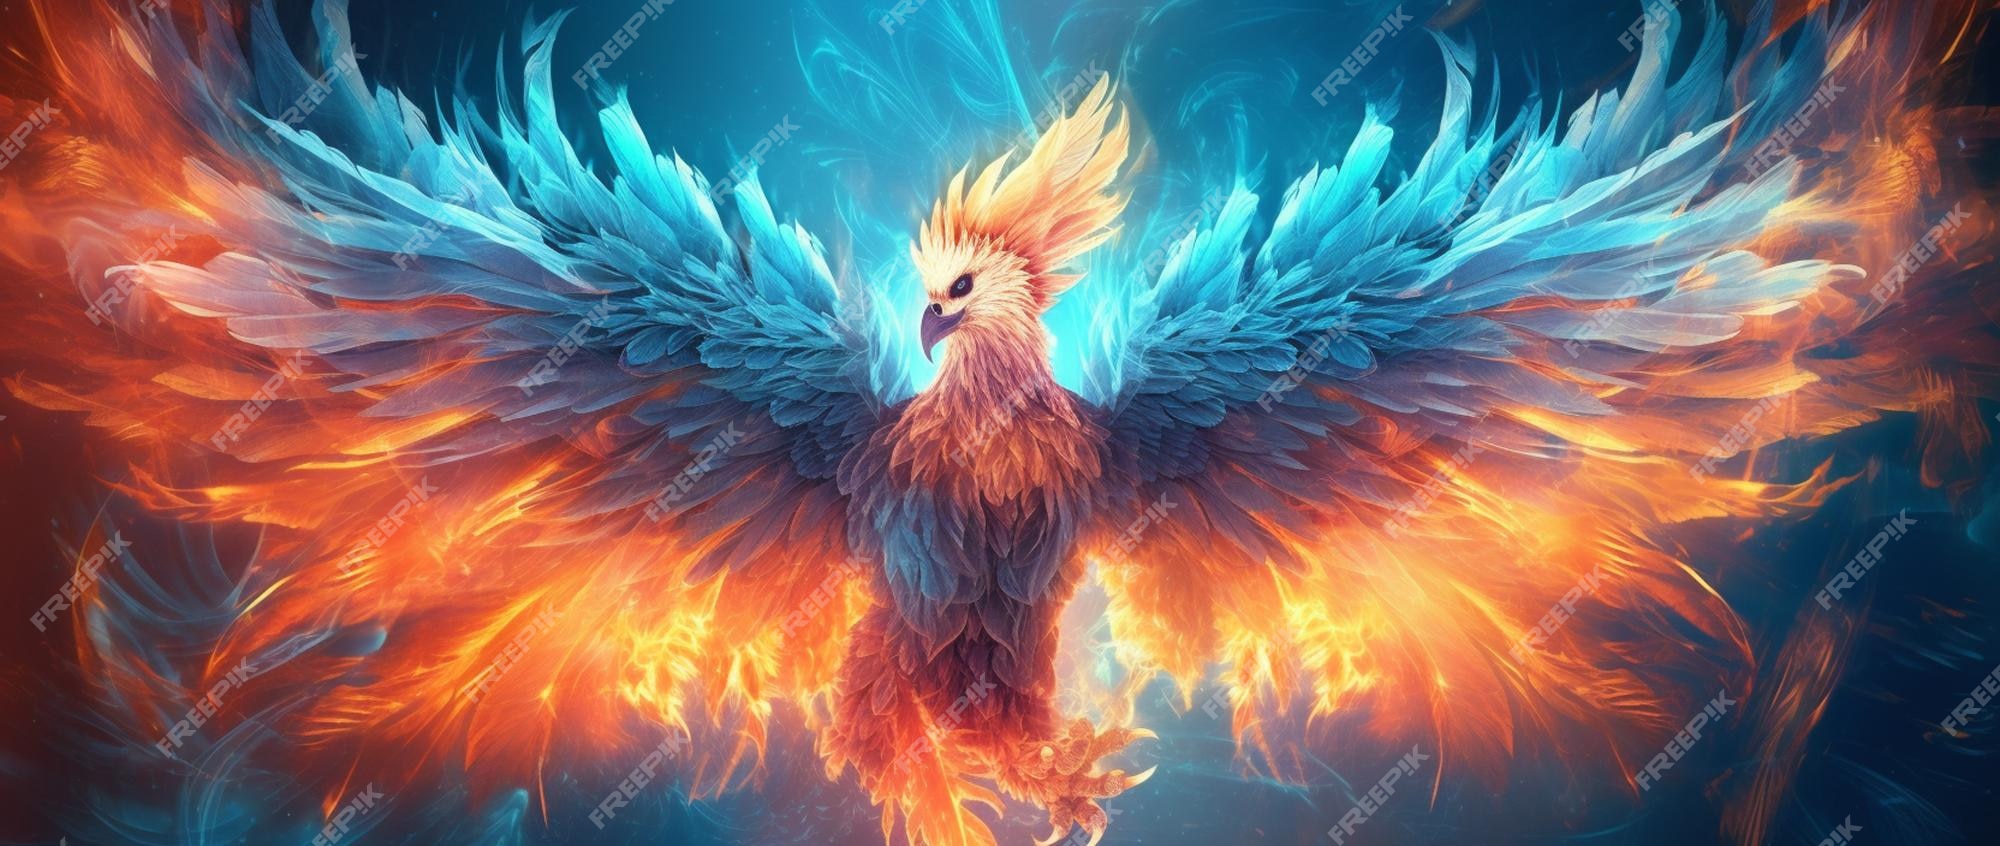 Premium Photo | A phoenix bird with blue and orange flames